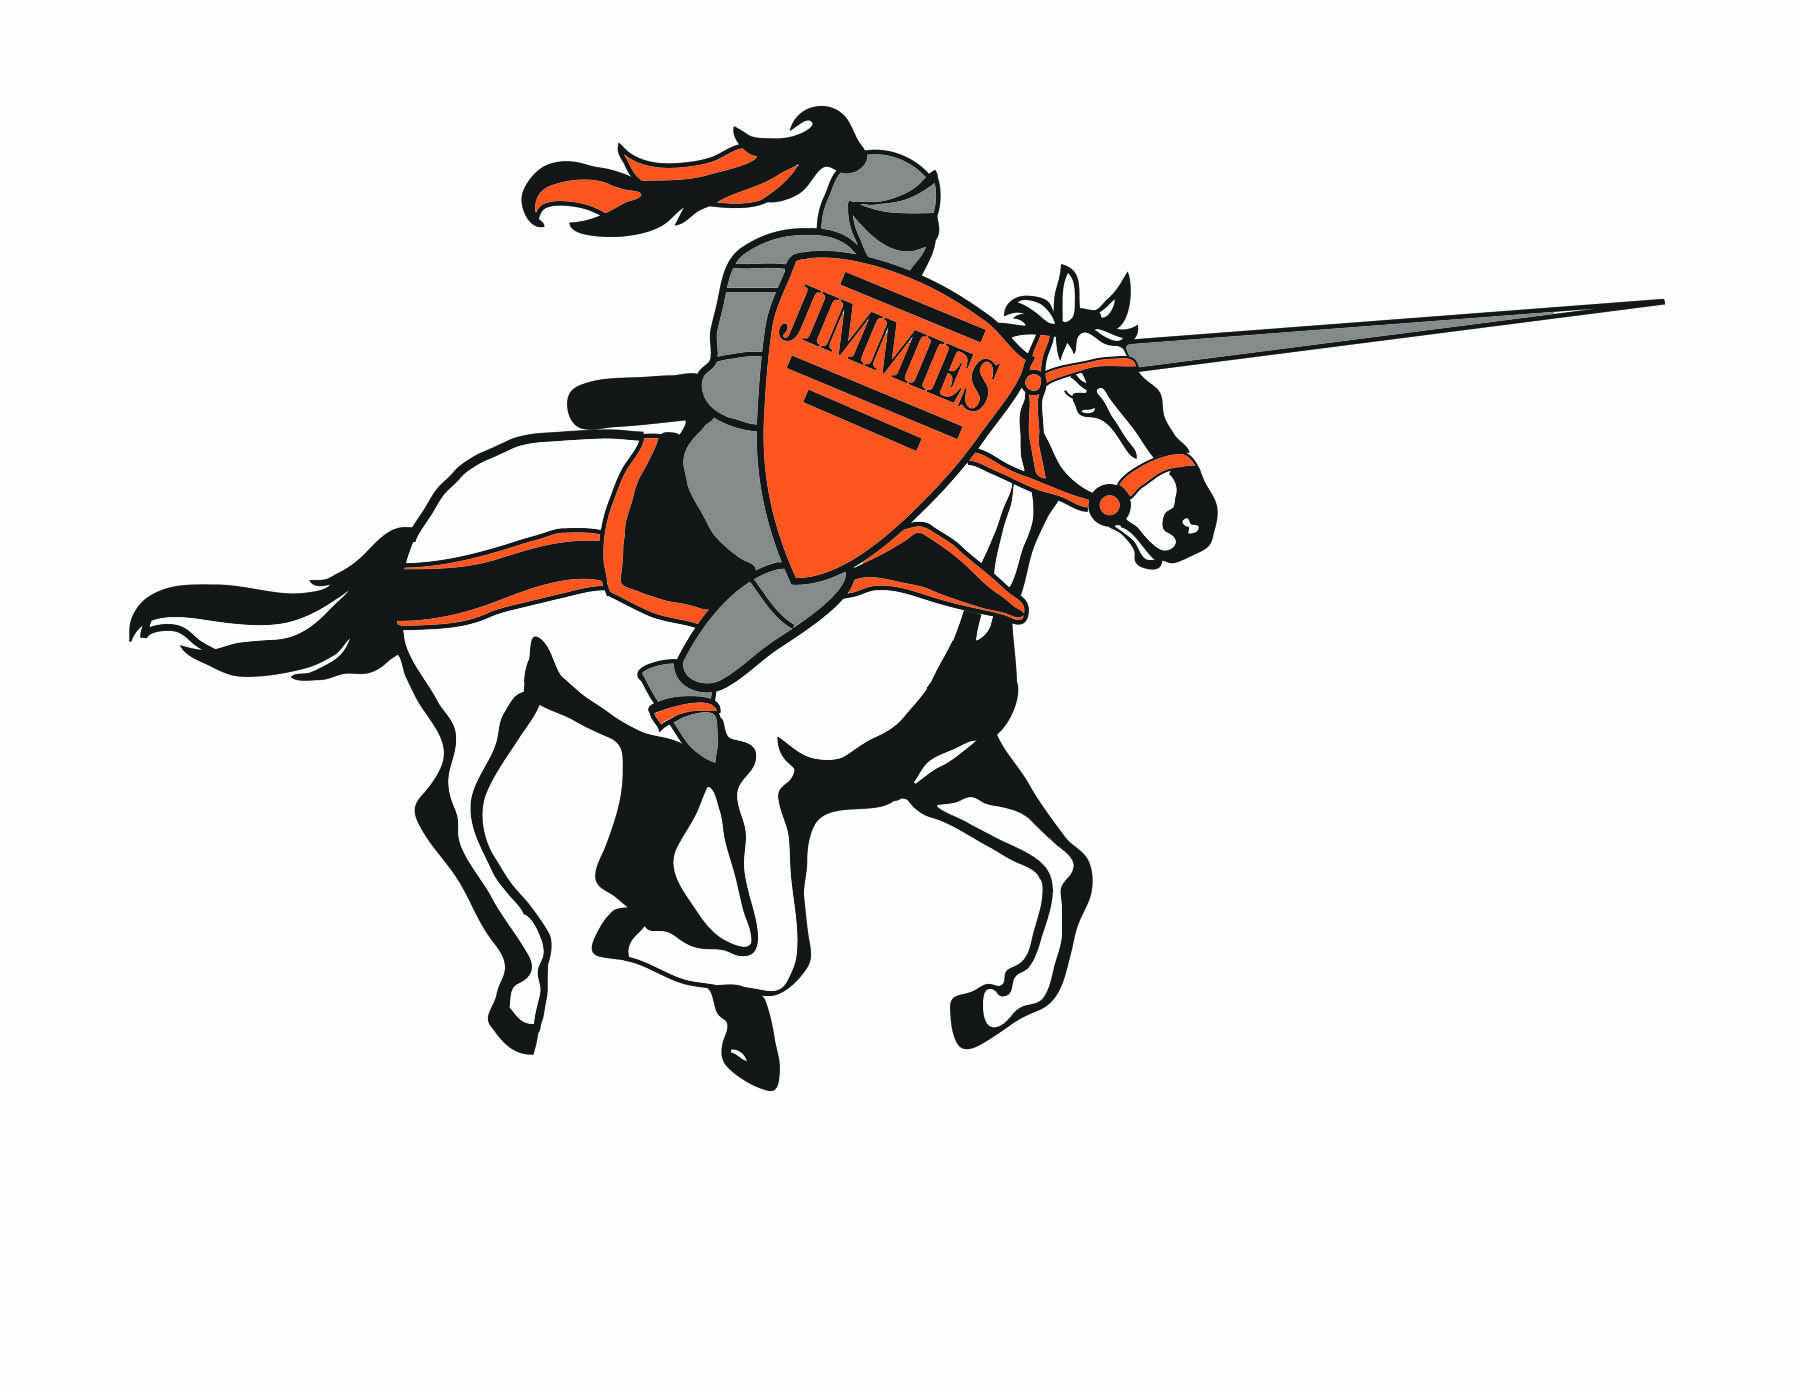 UJ Knight Logo